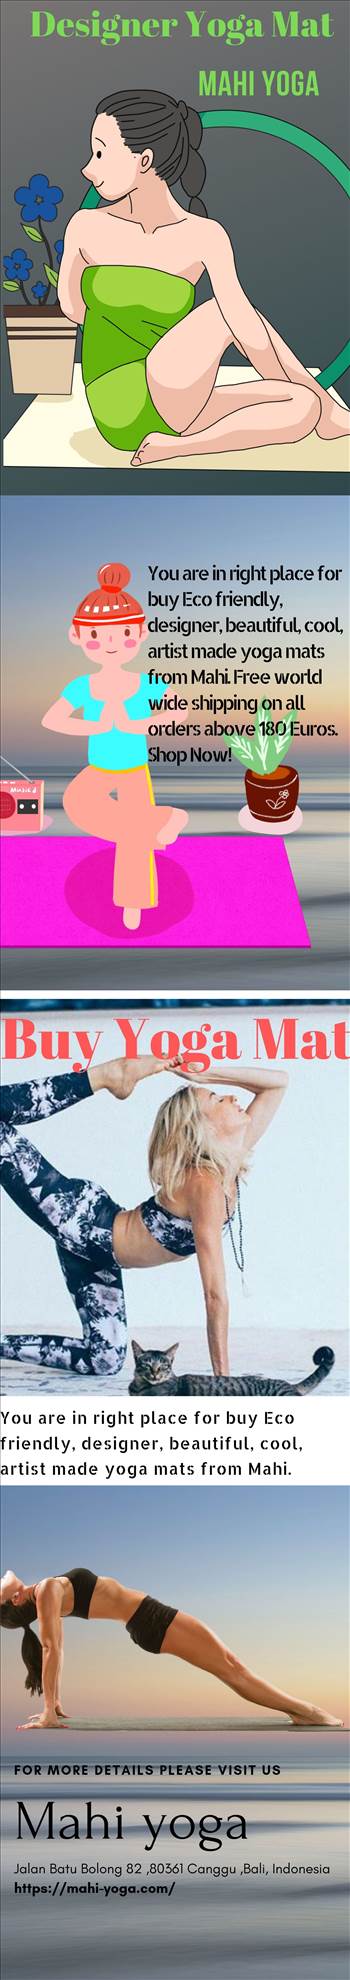 Designer Yoga Mat.jpeg by Mahiyoga